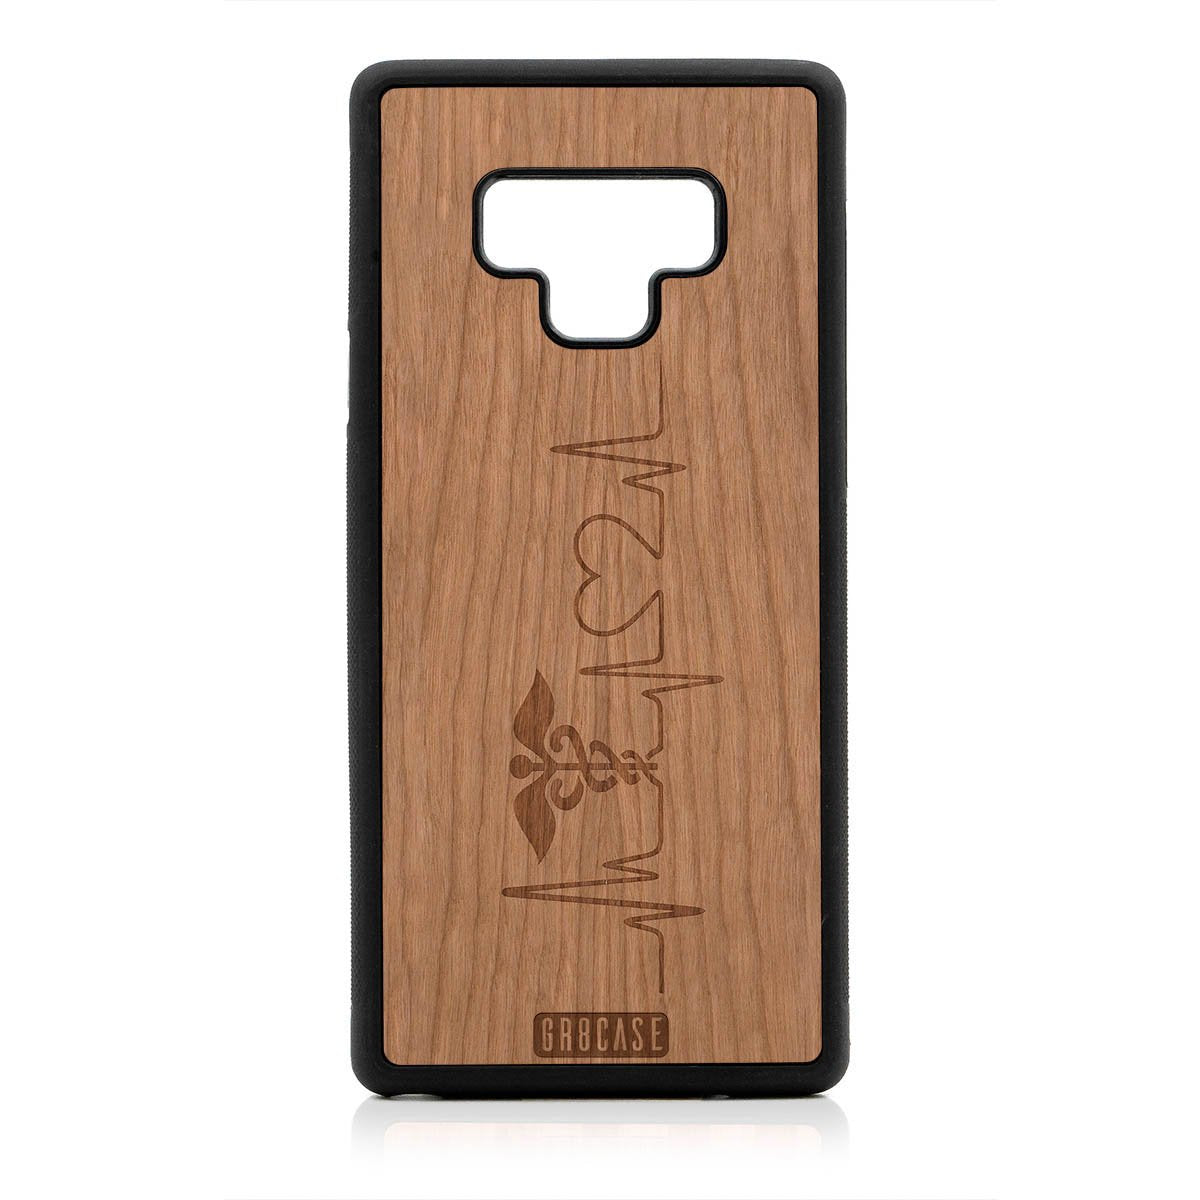 Hero's Heart (Nurse, Doctor) Design Wood Case Samsung Galaxy Note 9 by GR8CASE